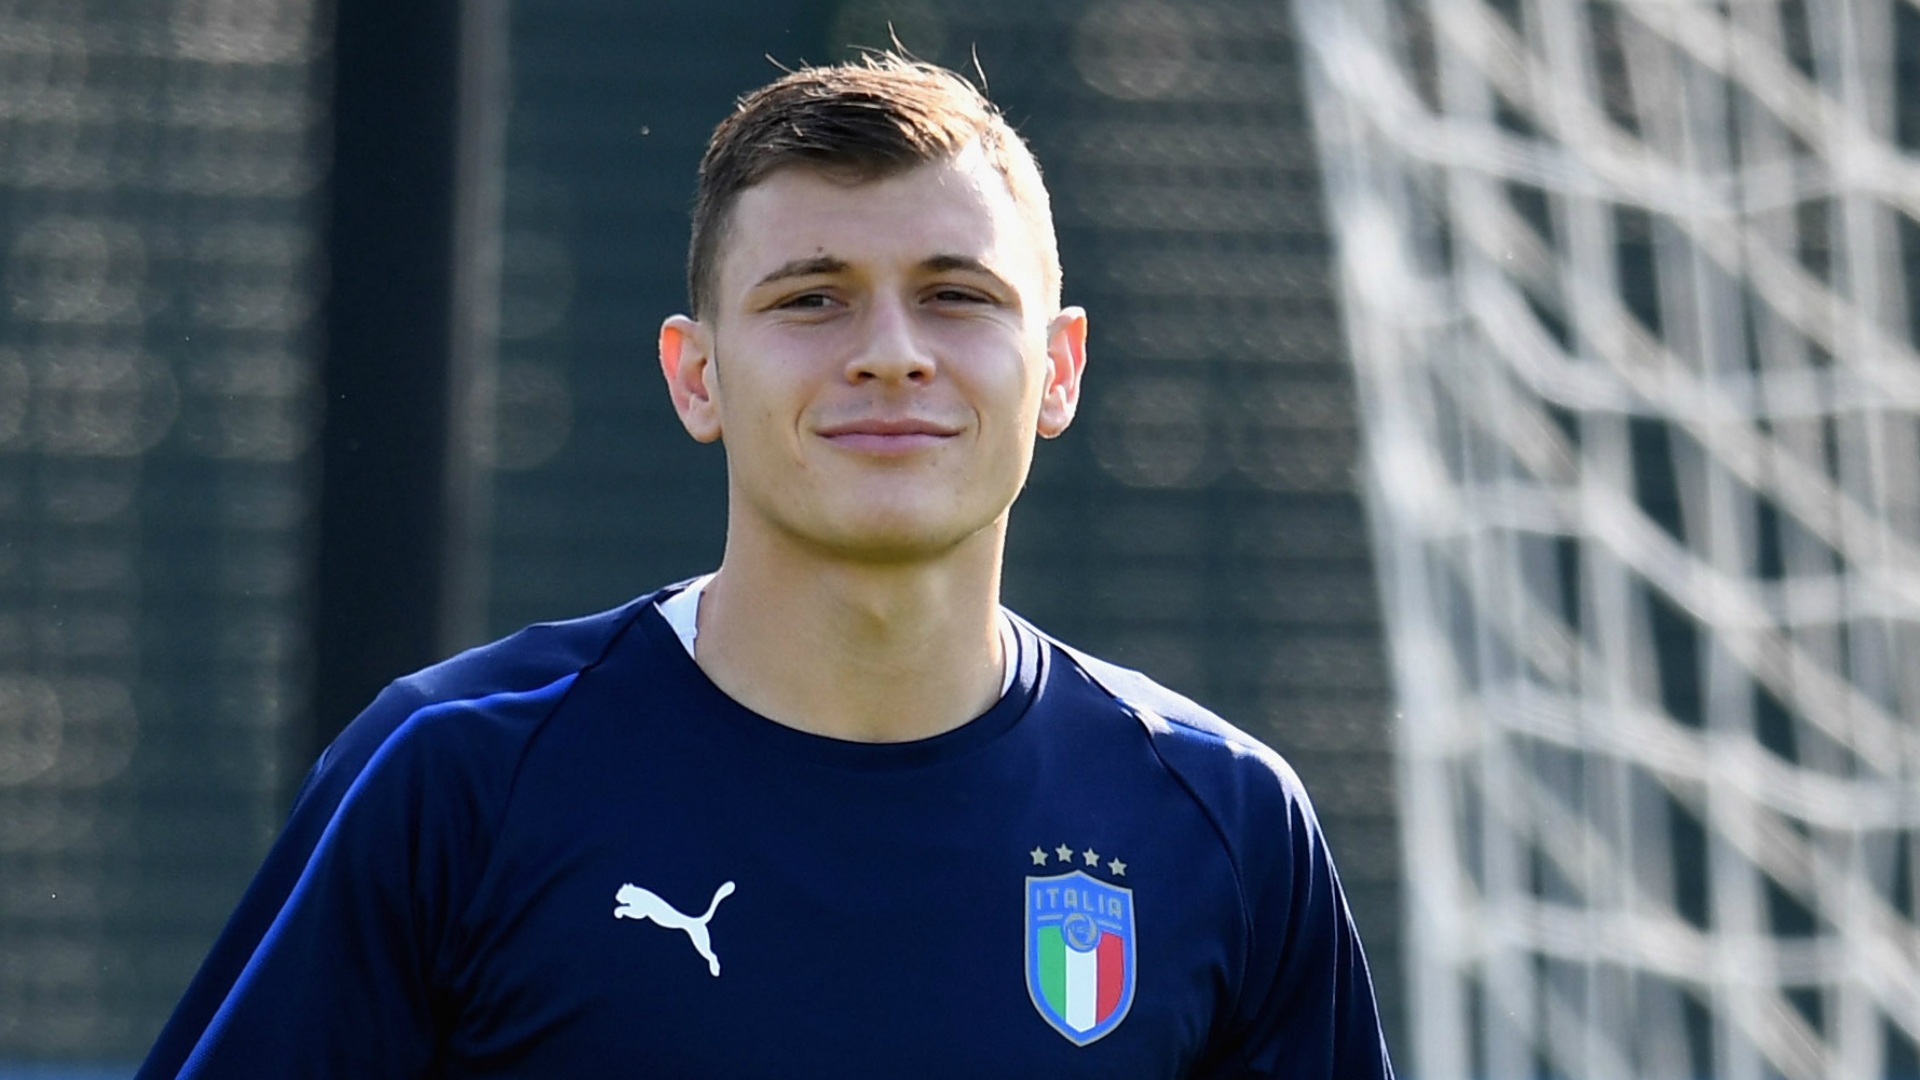 Inter sign Italy international midfielder Barella from Cagliari in €50m deal